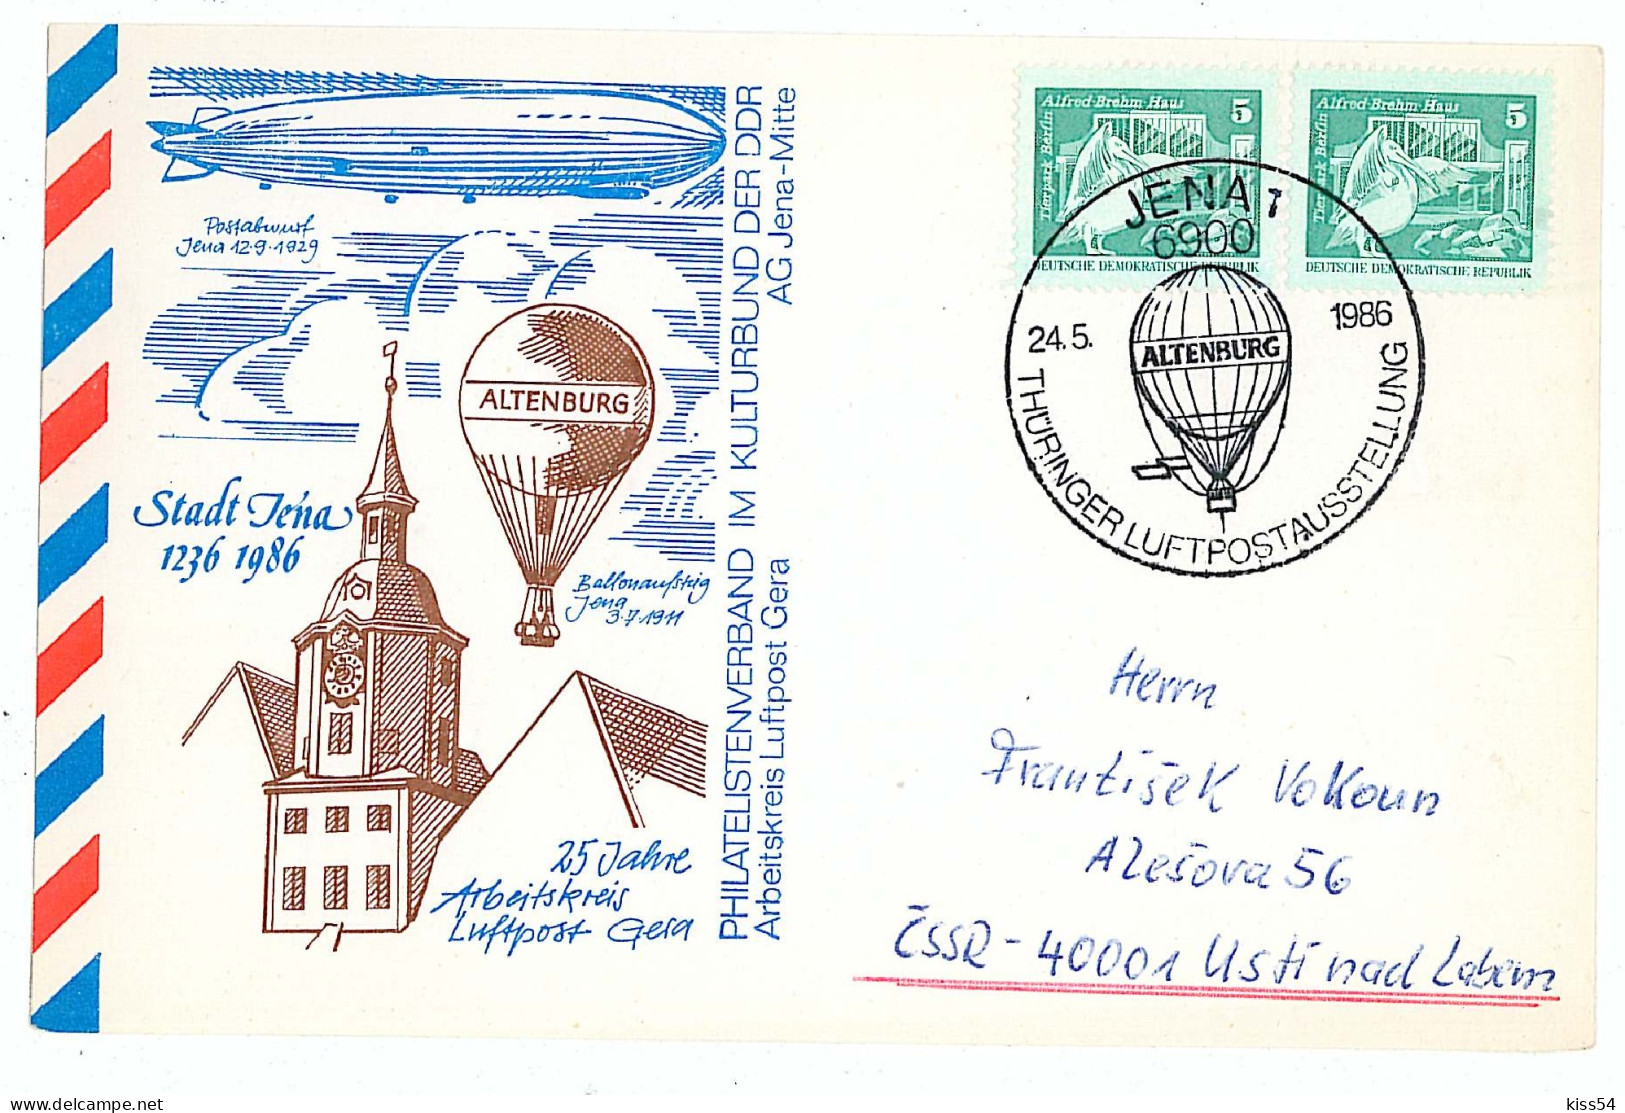 COV 58 - 93 BALLOON, Germany - Cover - Used - 1986 - Altri (Aria)